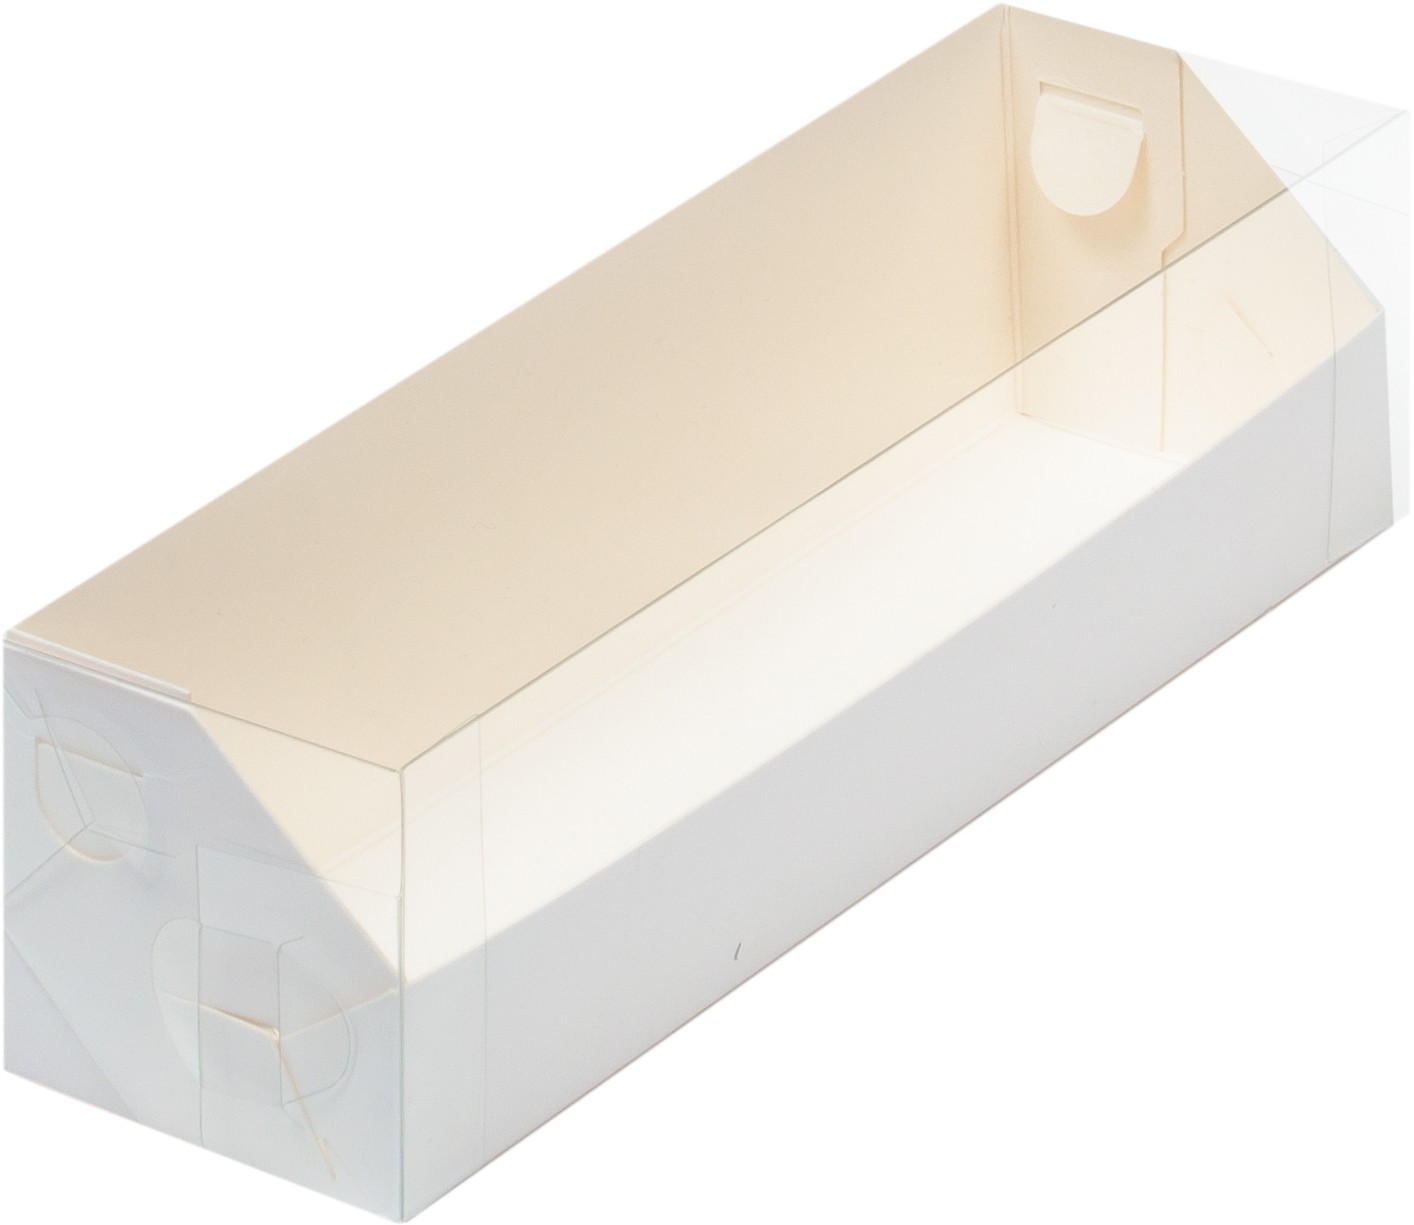 Коробка для макарон с пластиковой крышкой НОВИНКА 190*55*55 мм (белая)